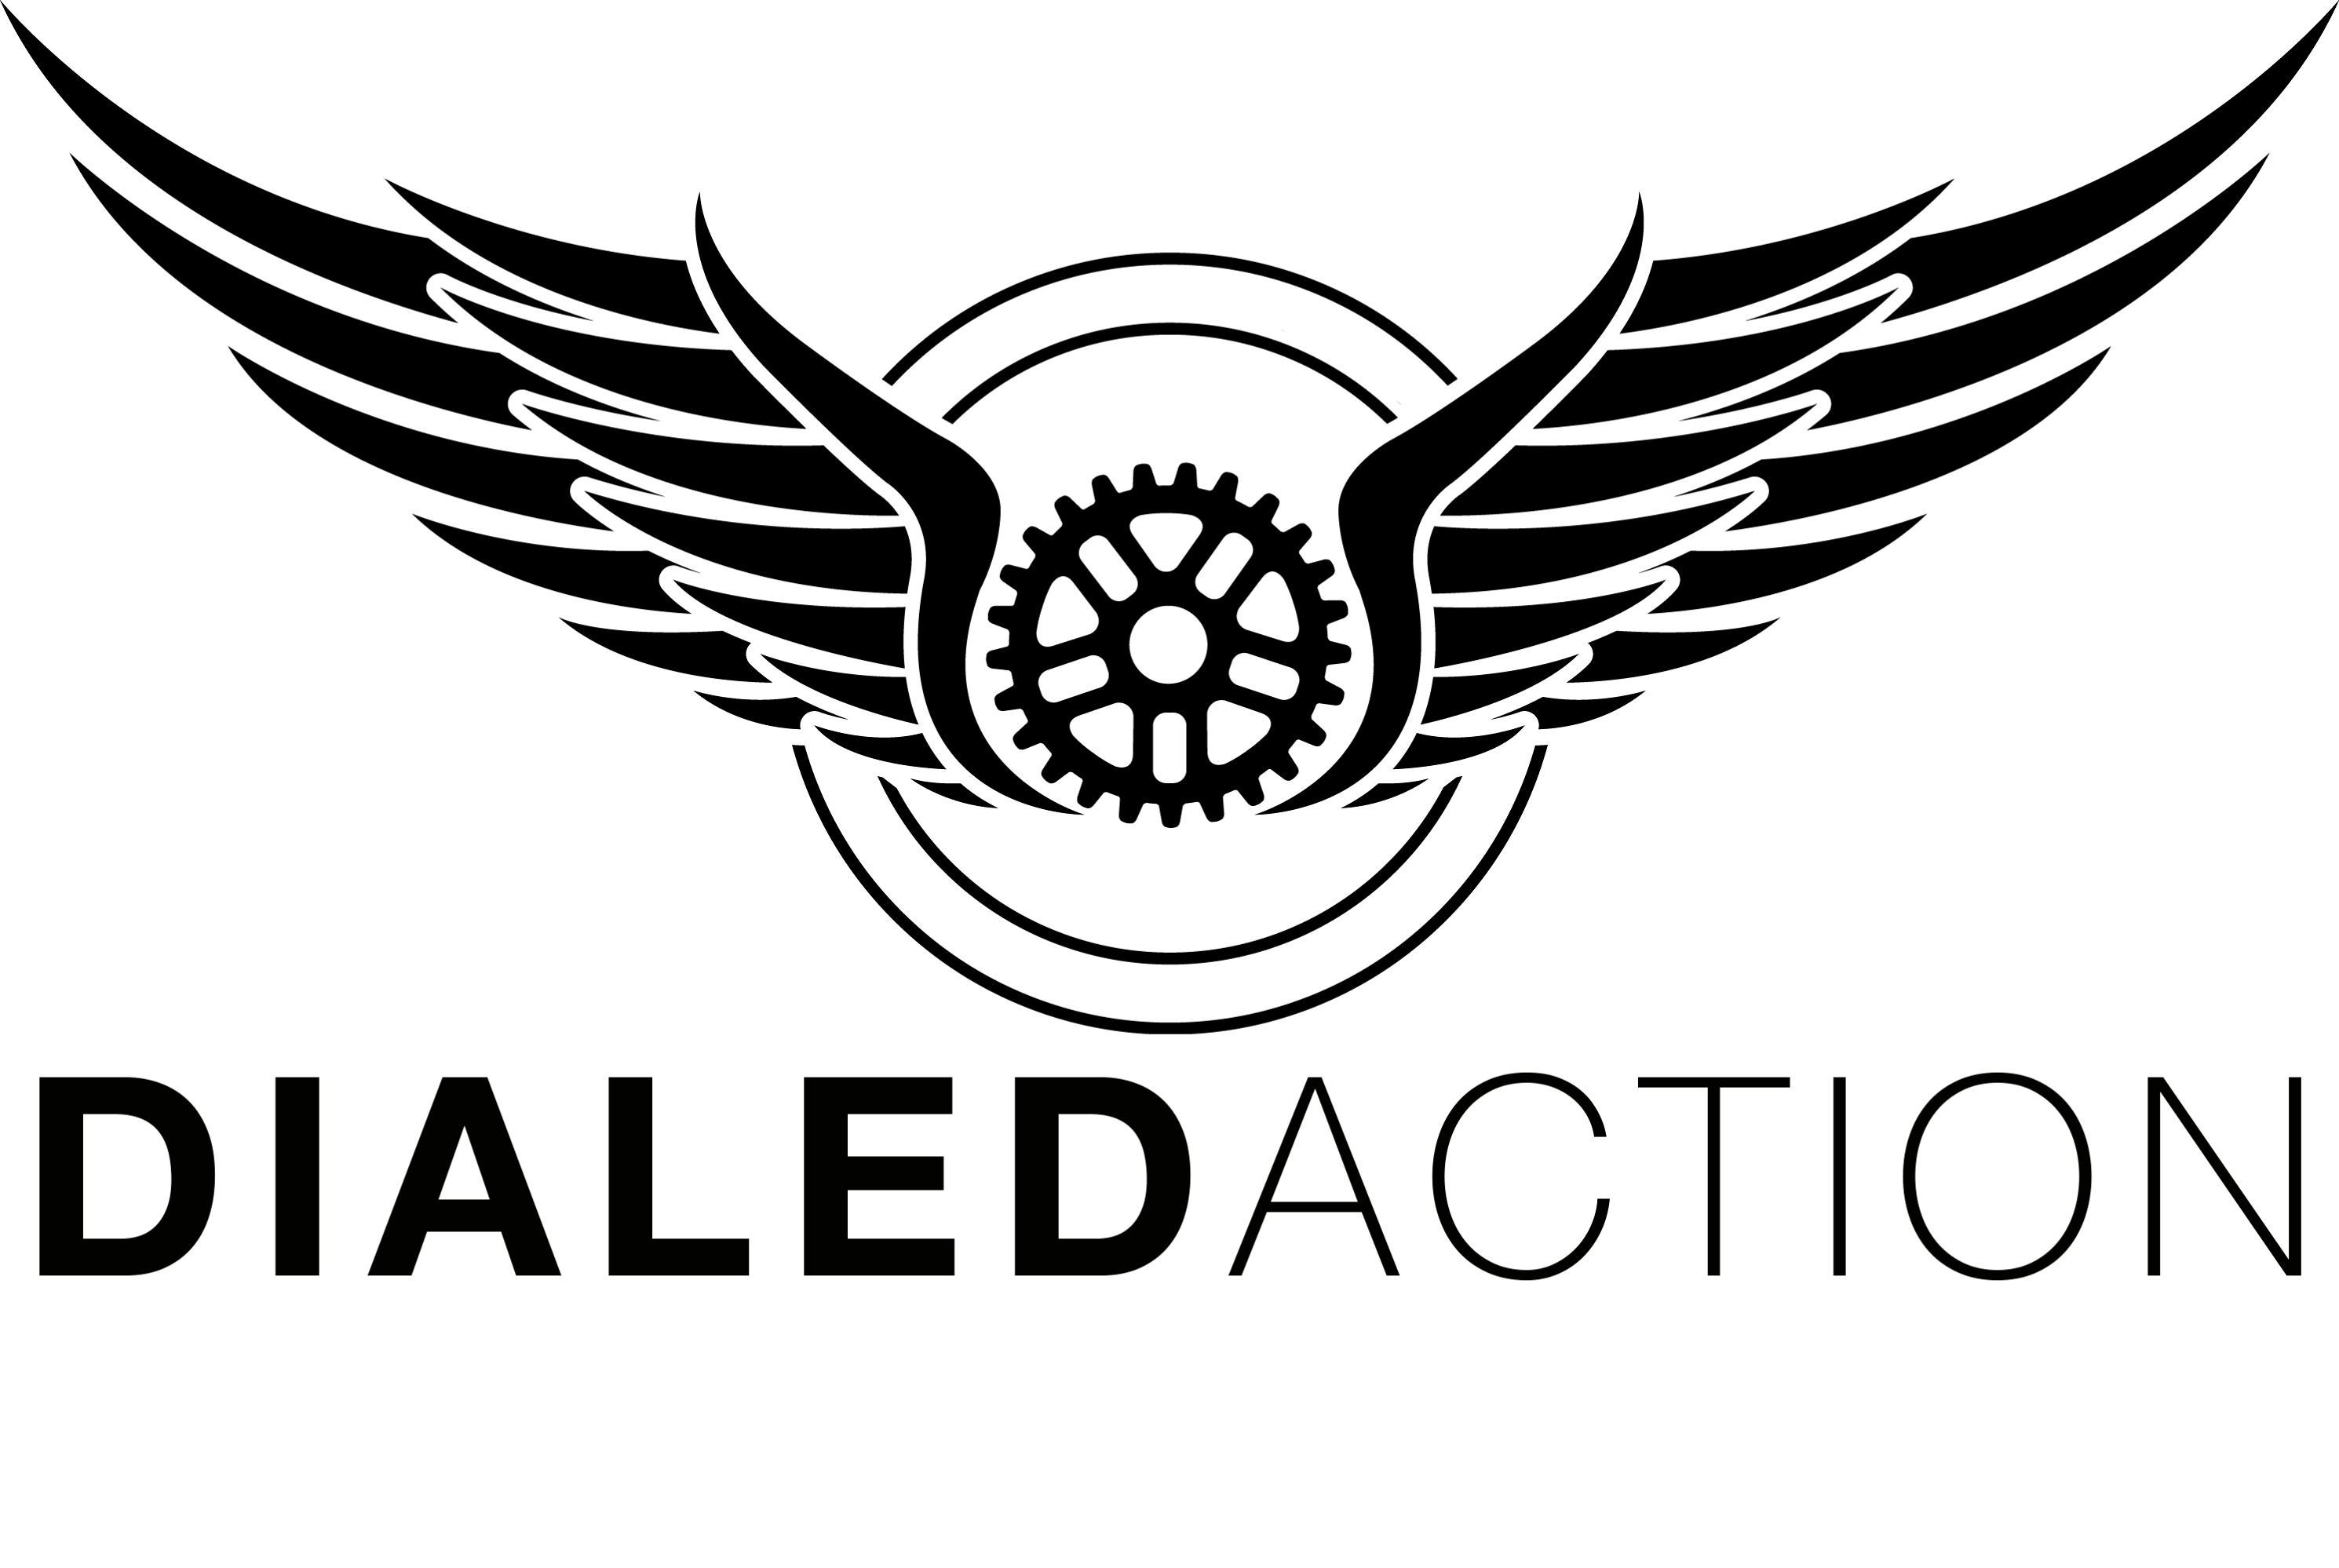 2021 dialed action logo black (12) (21)